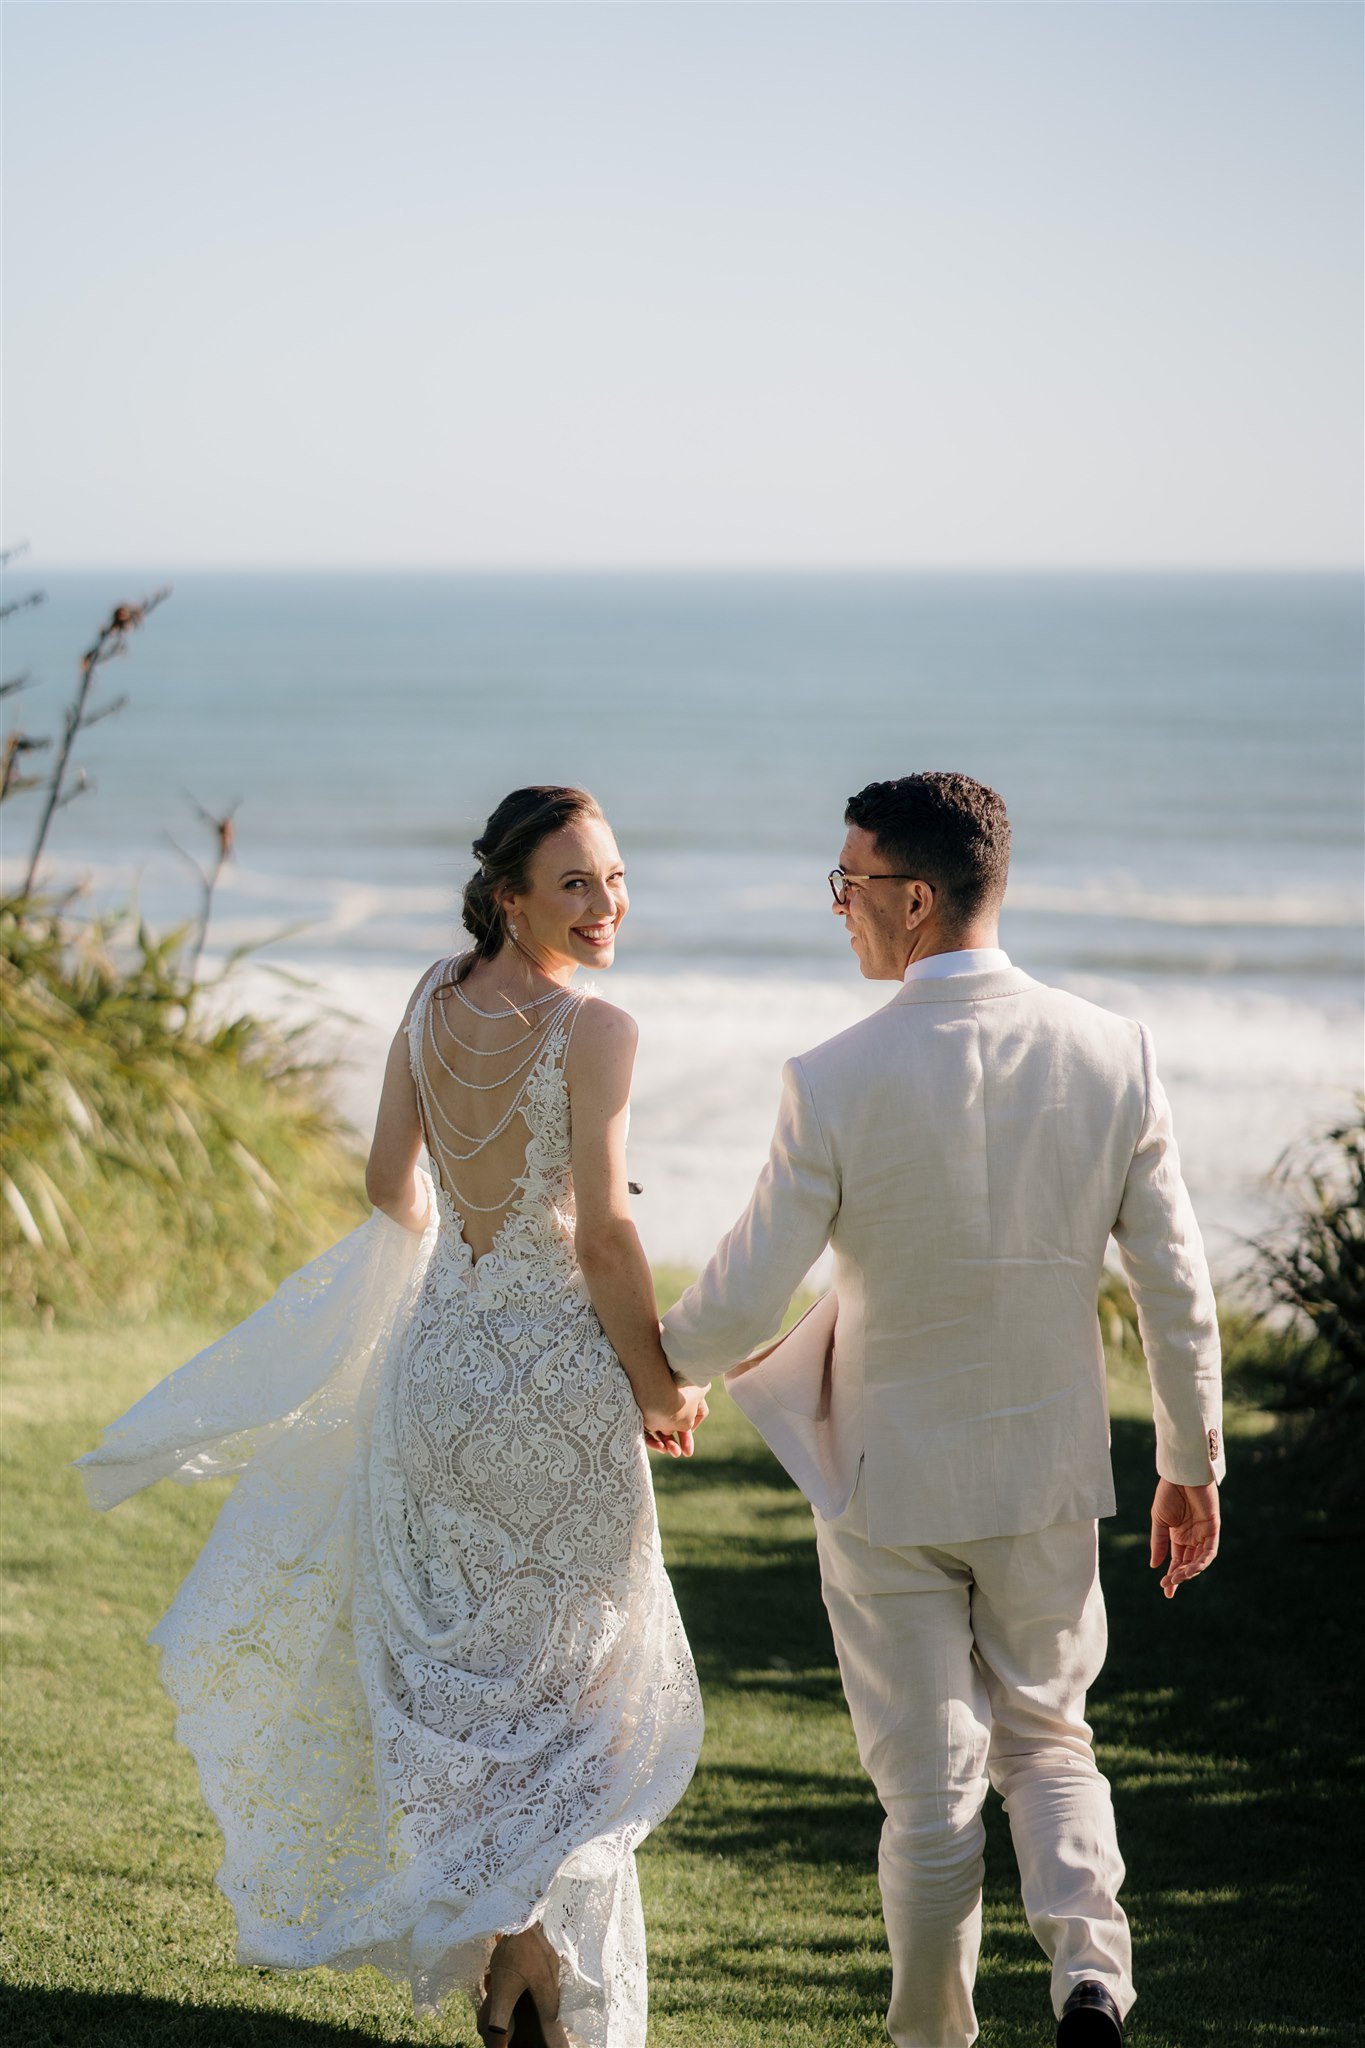 castaways-NZ-new-zealand-auckland-wedding-photographer-photography-videography-film-dear-white-productions-best-venue-waiuku-engagement-elopement-style-beach-intimate (233).jpg